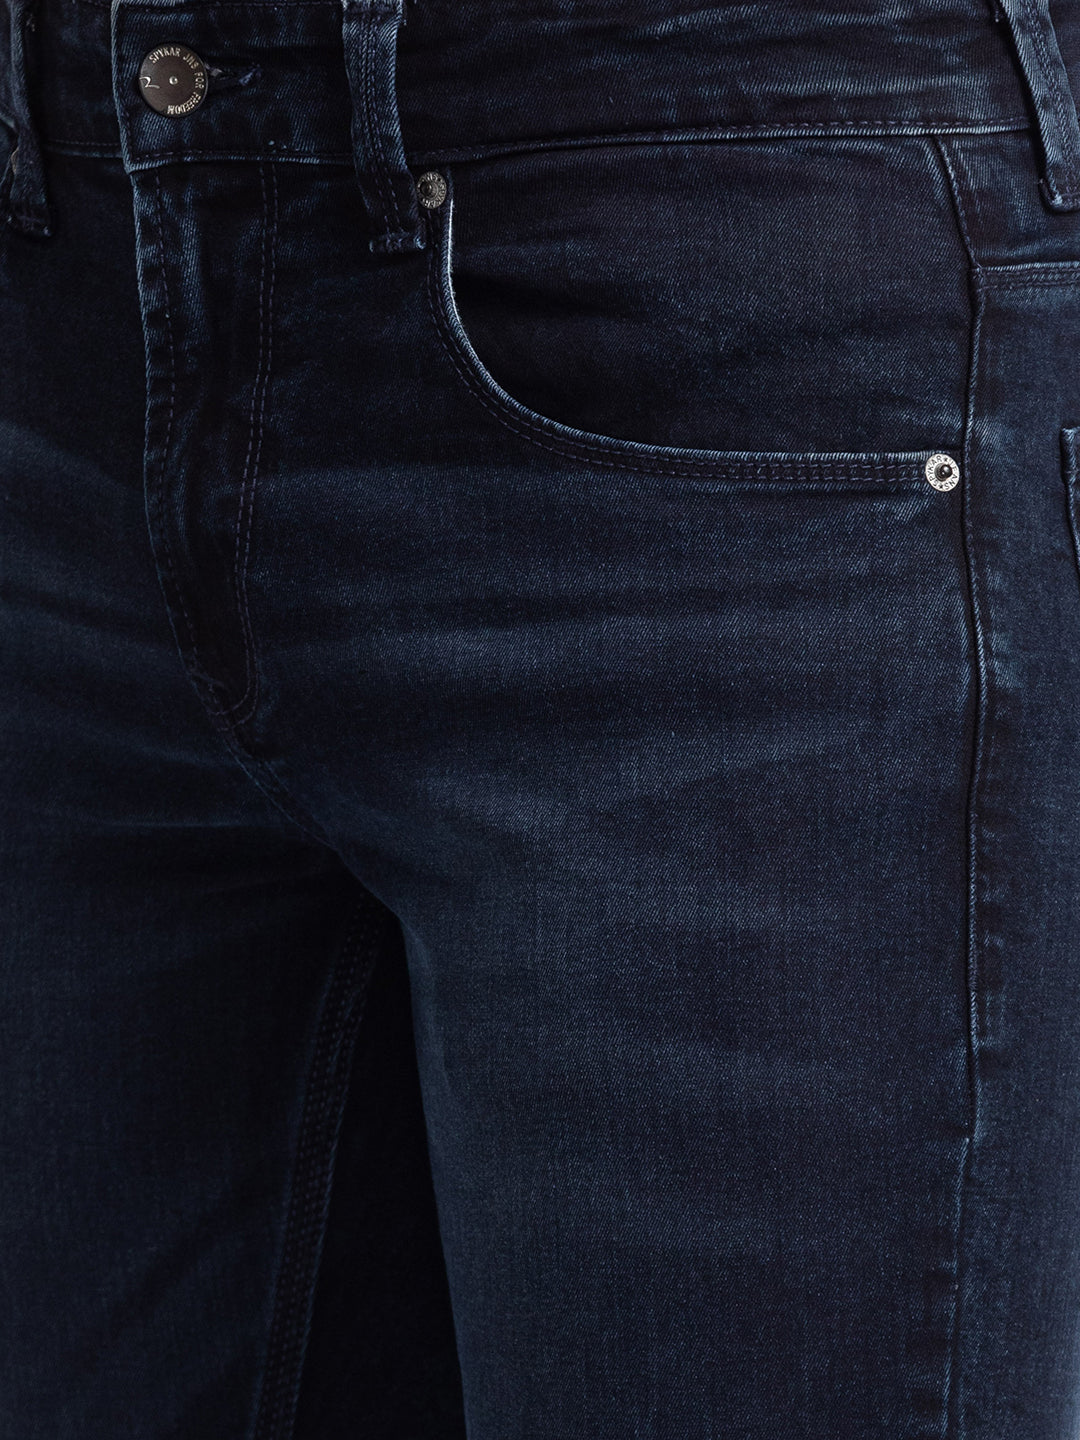 Spykar Blue Indigo Cotton Comfort Fit Regular Length Jeans For Men (Rafter)